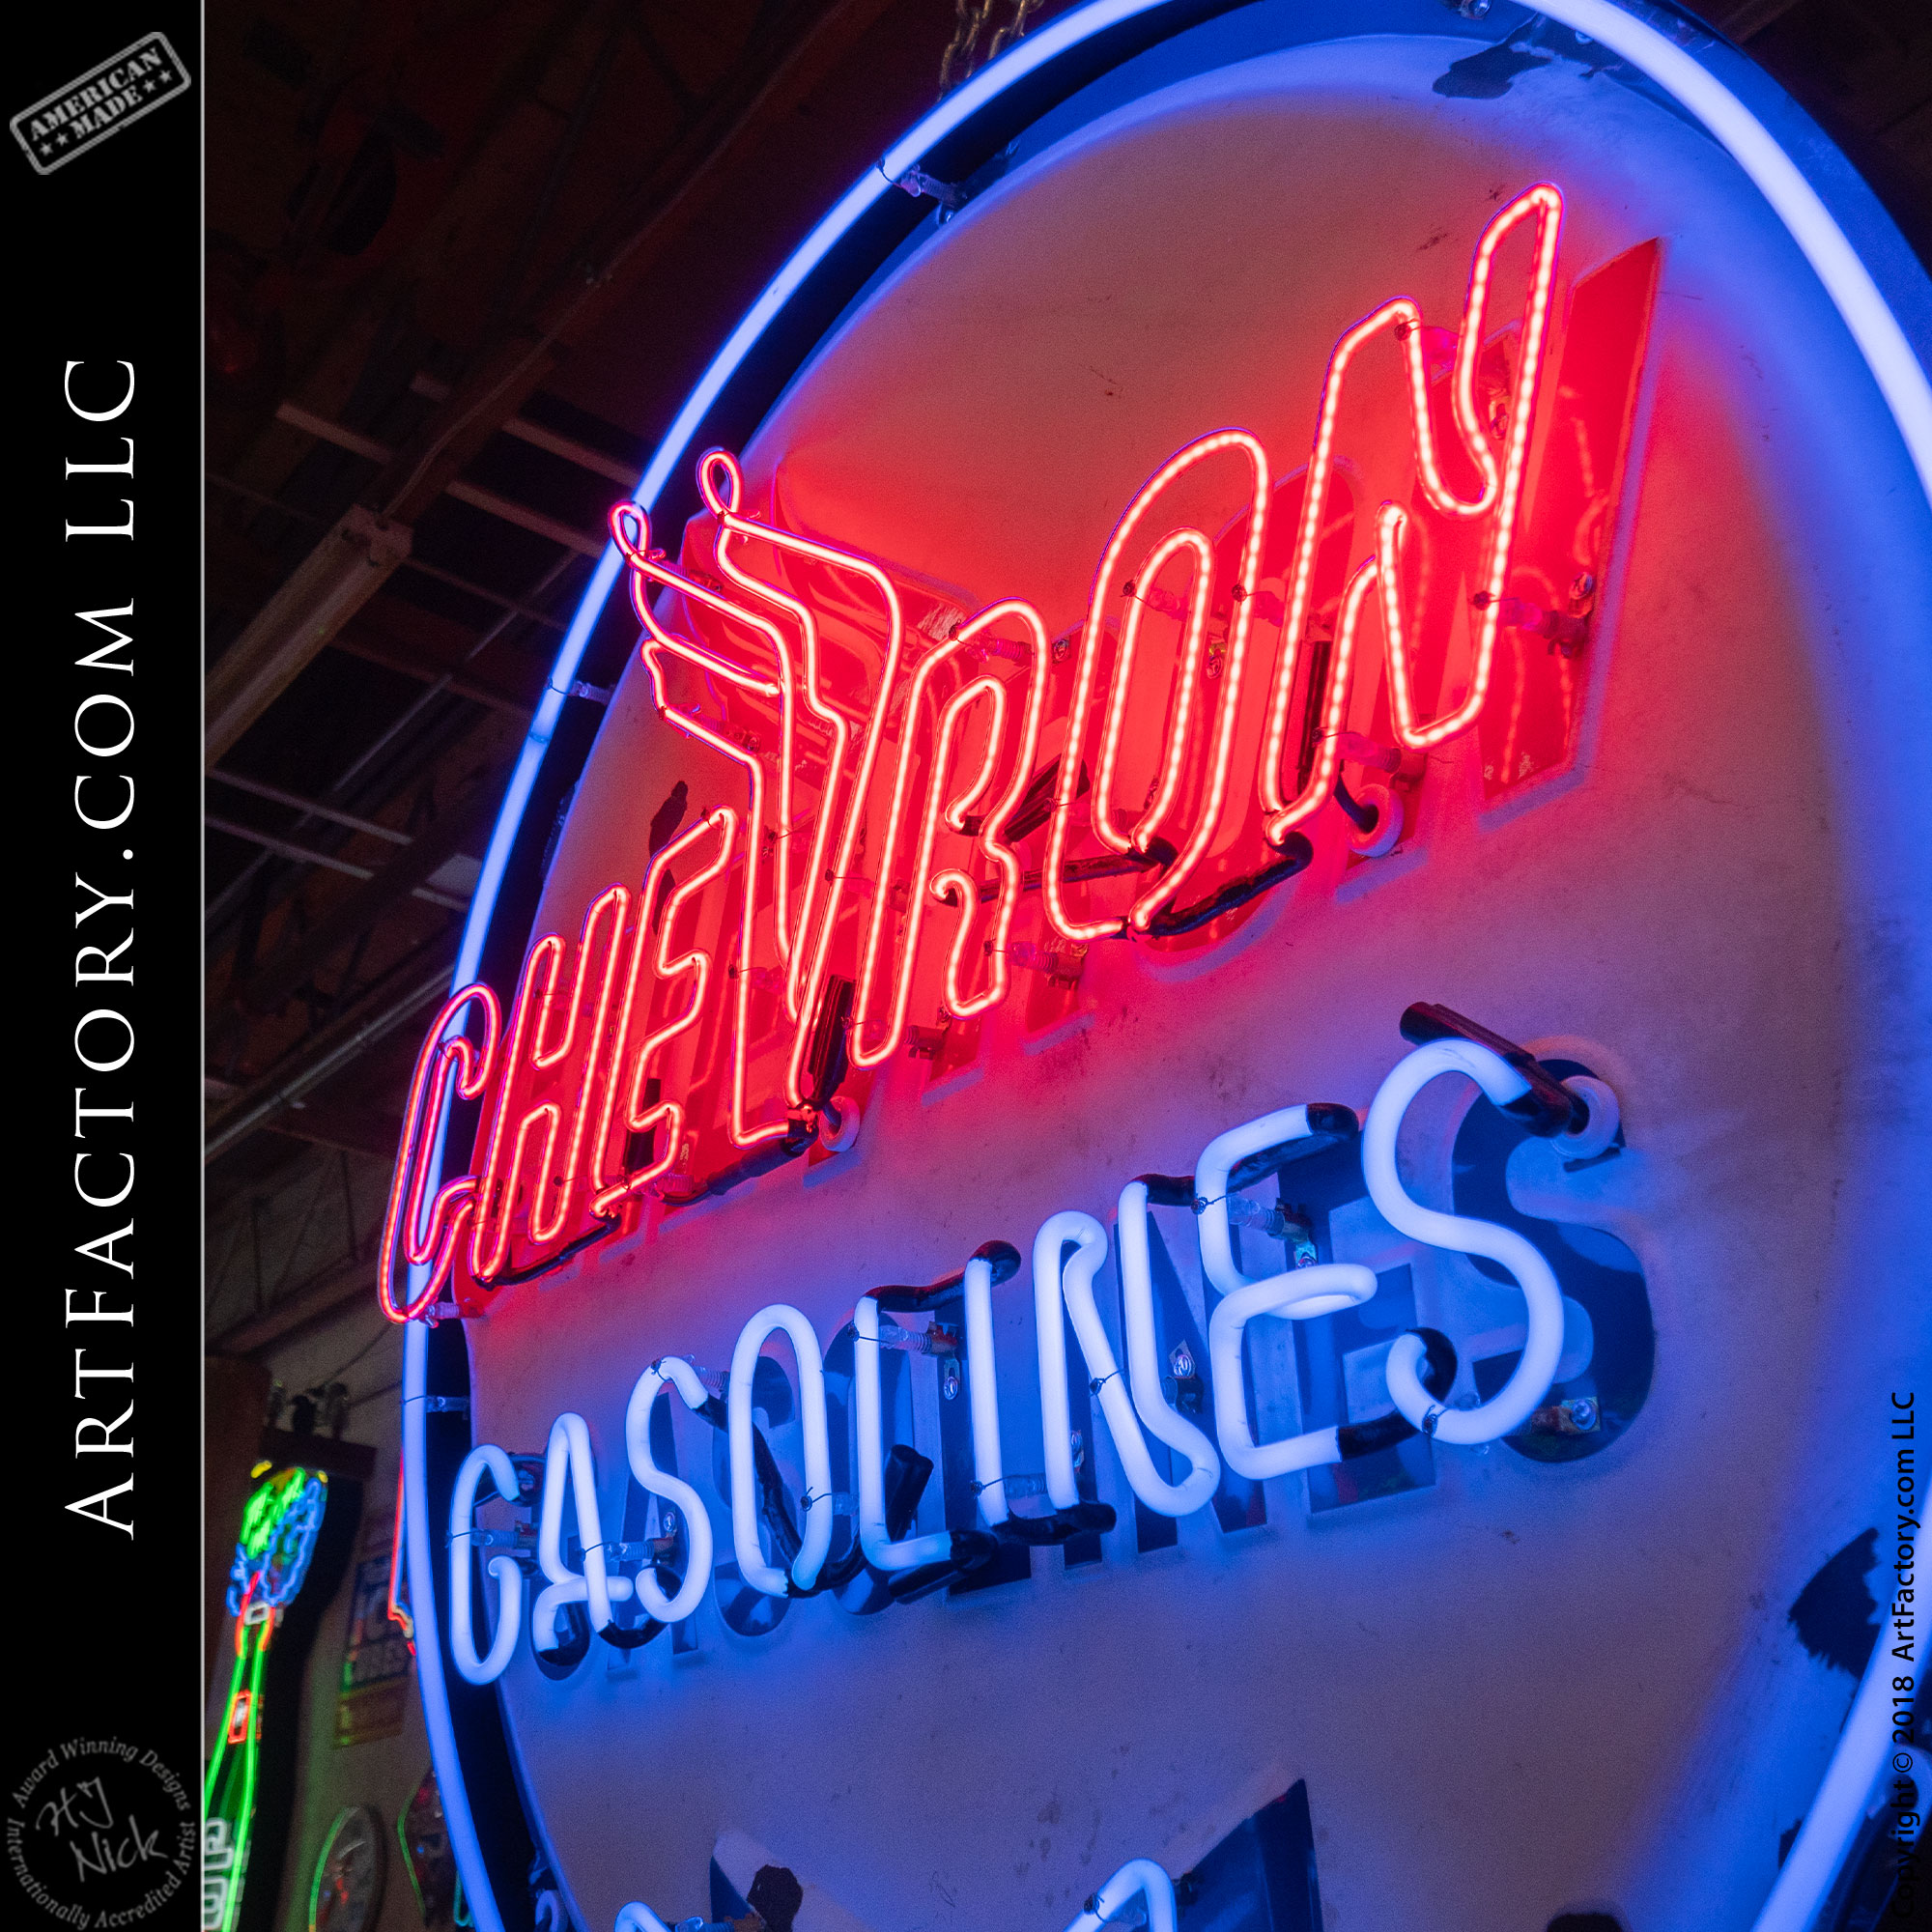 New Large Chevron Gasoline Garage Sign